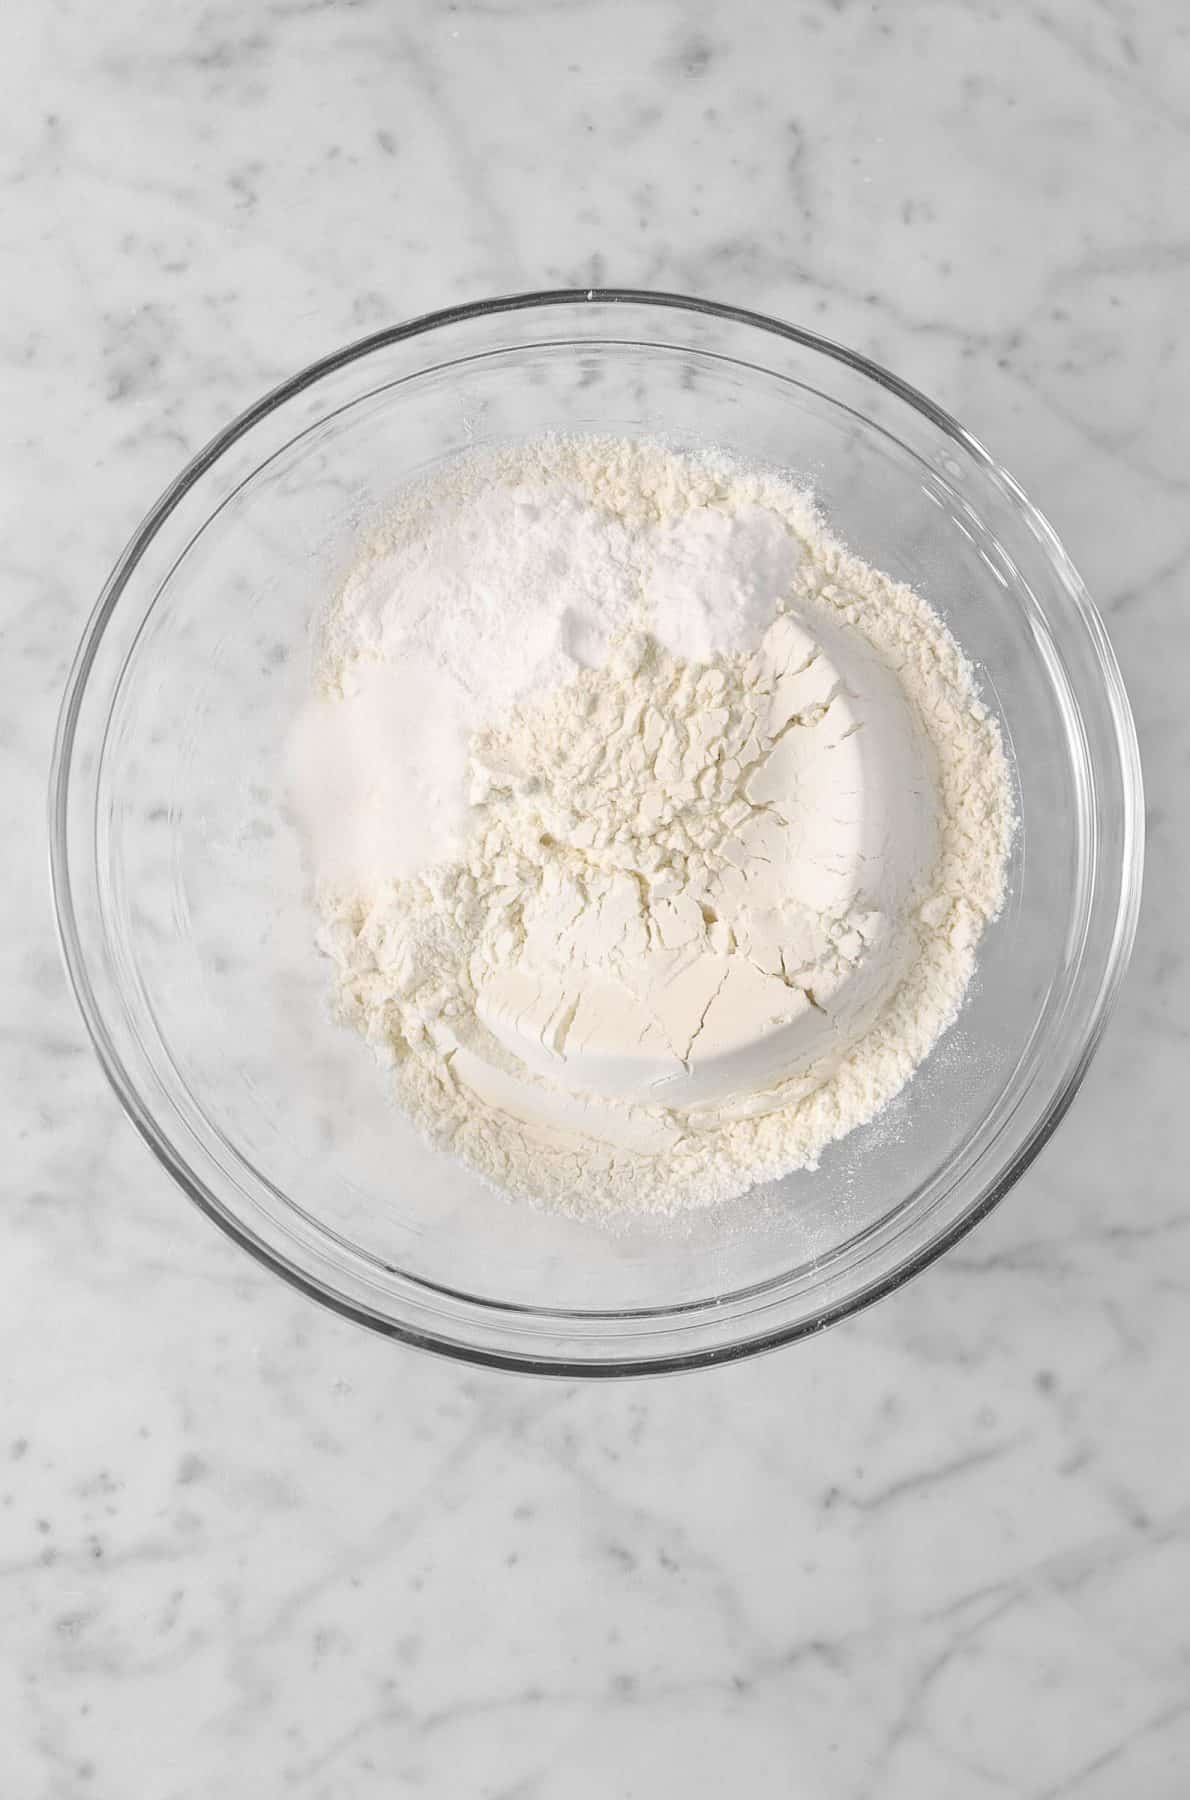 flour, baking powder, baking soda, and salt in a glass bowl